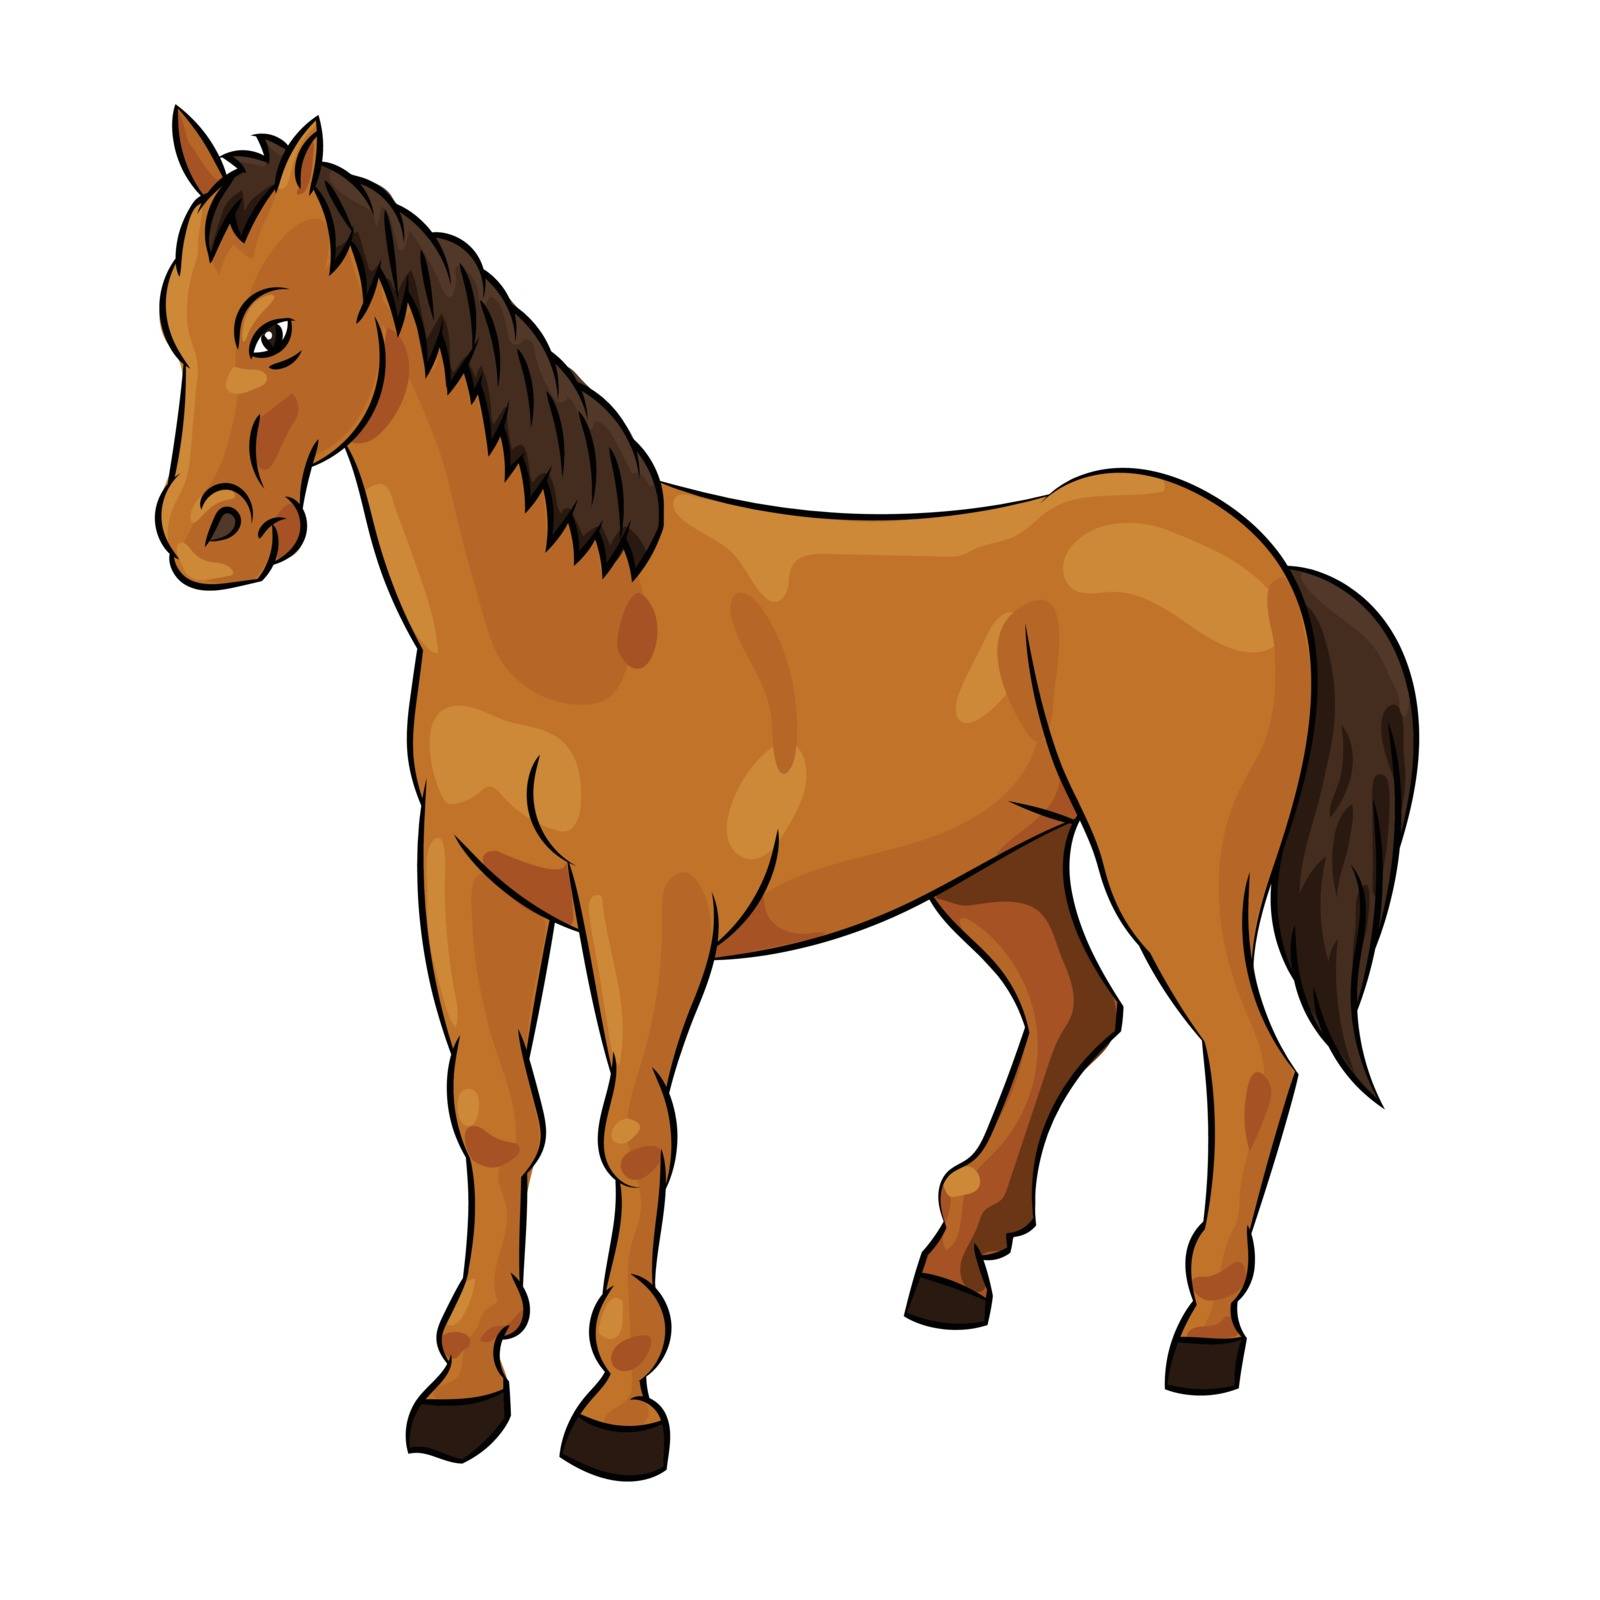 Illustration of Horse - Vector Illustration by solargaria